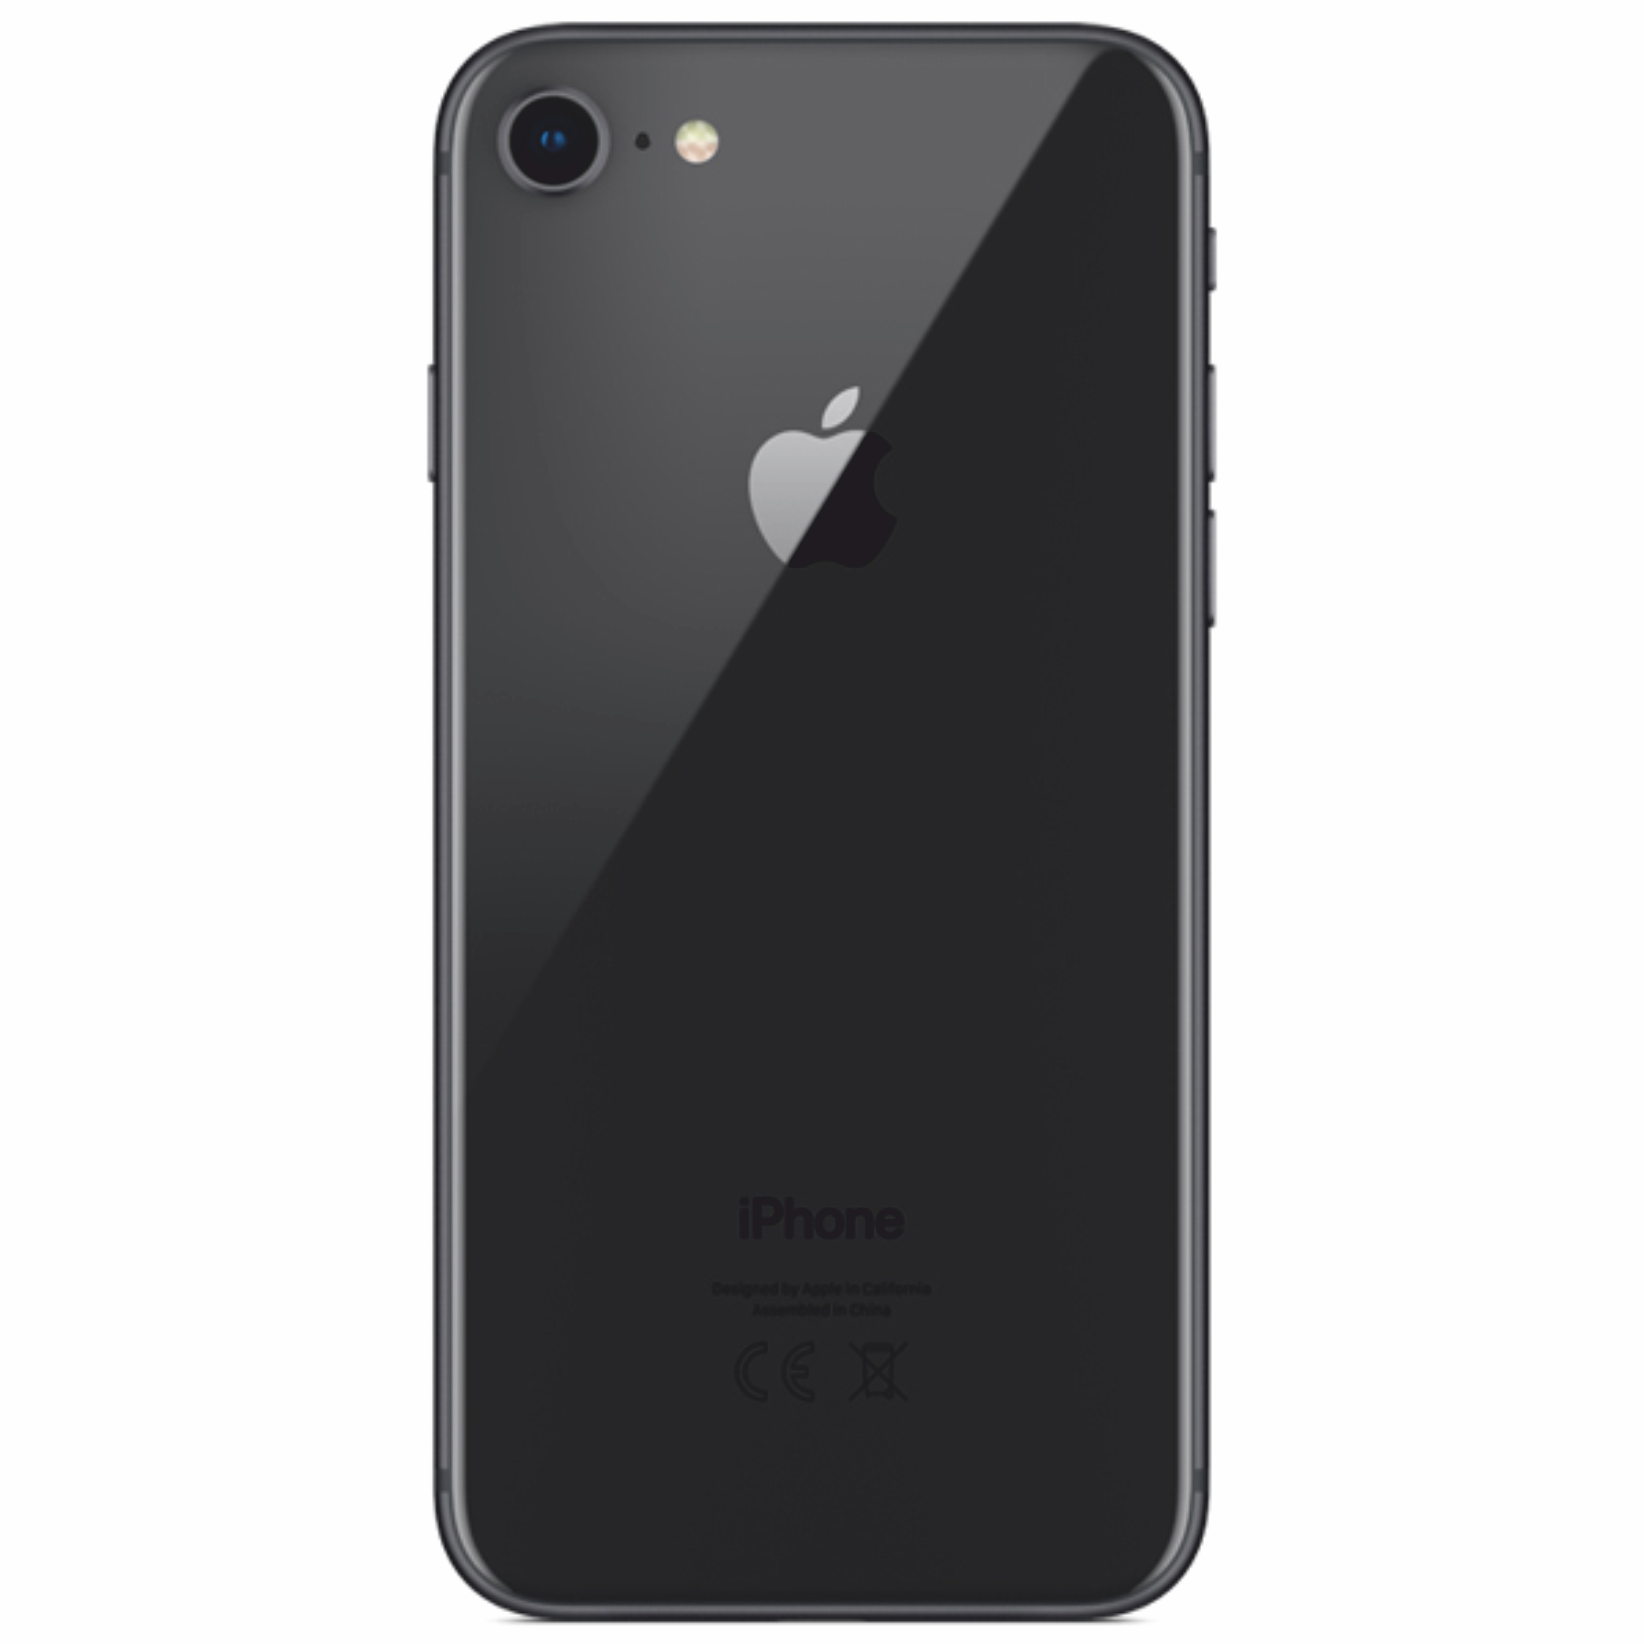 Iphone x Space Gray 256gb. Смартфон Apple iphone XR 64gb. Iphone XR 64gb Black. Apple iphone 8 64gb Space Gray.